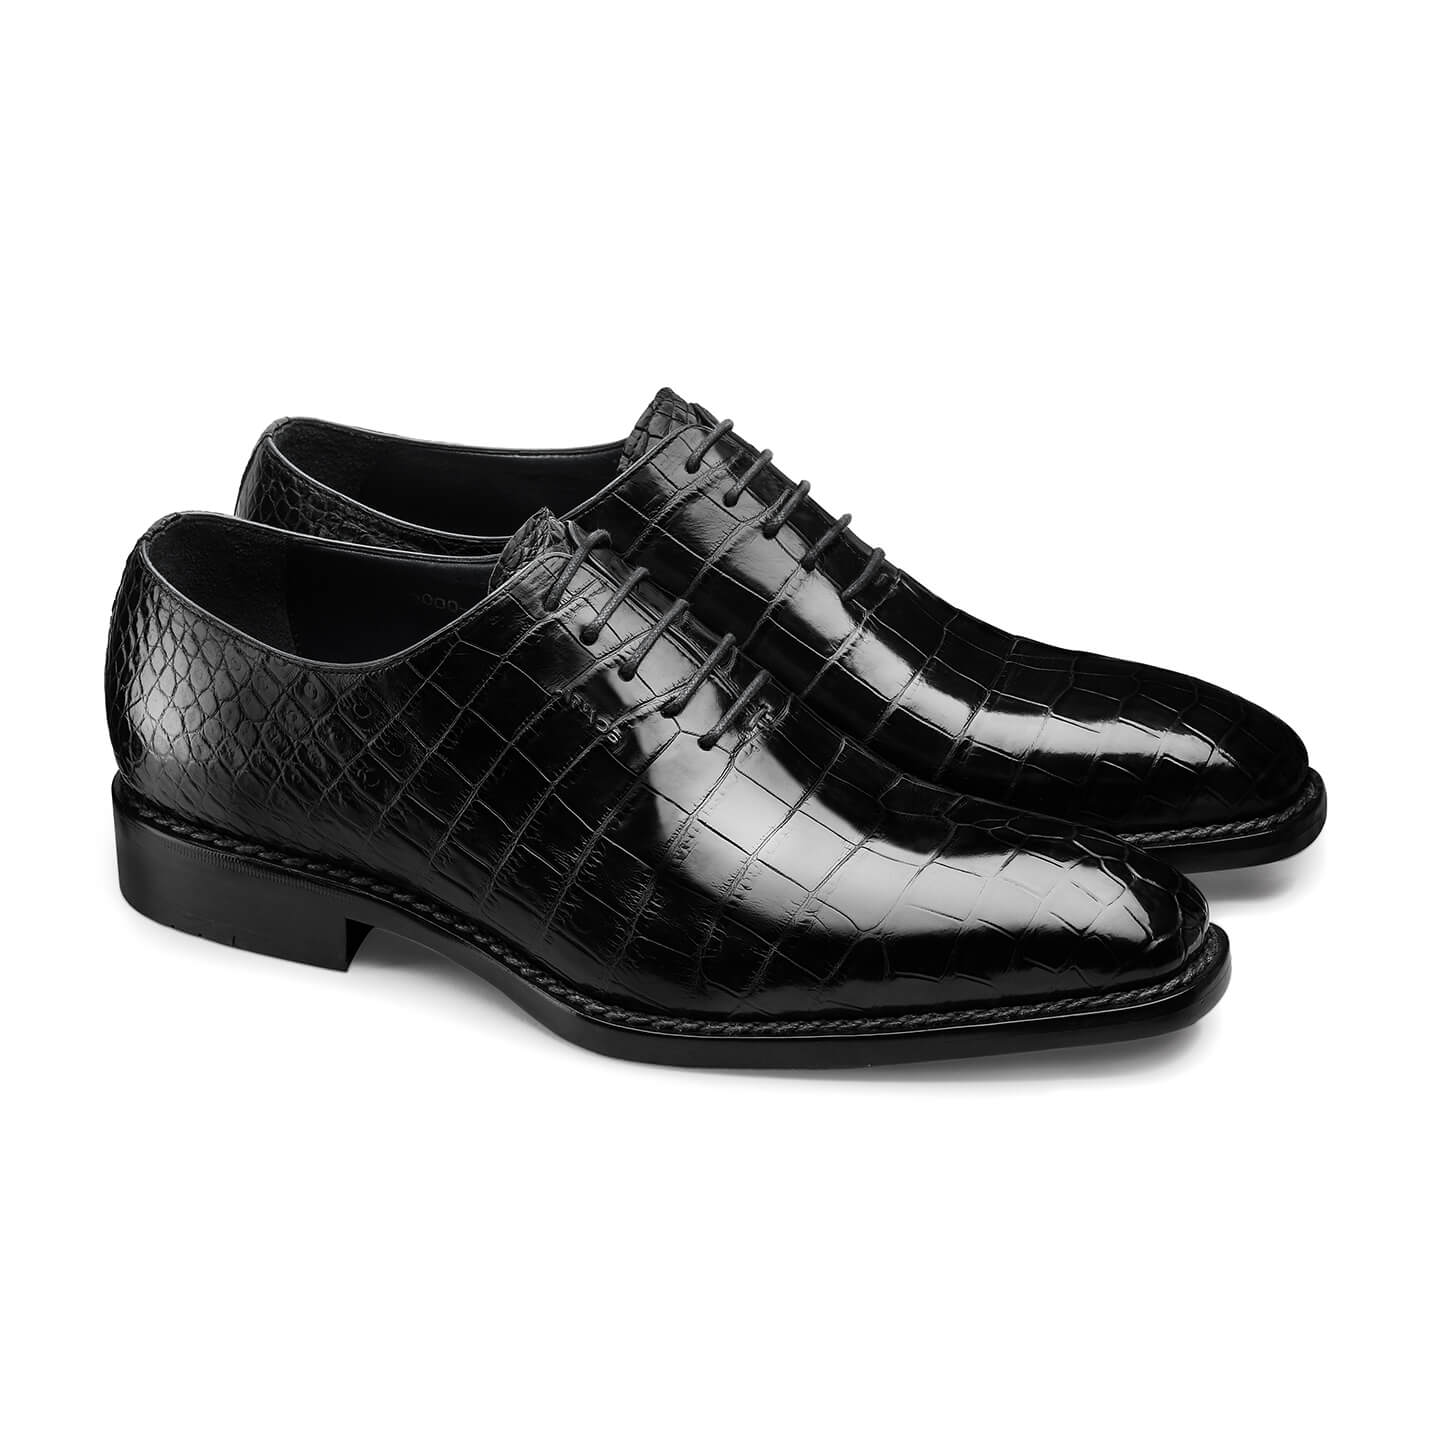 Crocodile leather shoes